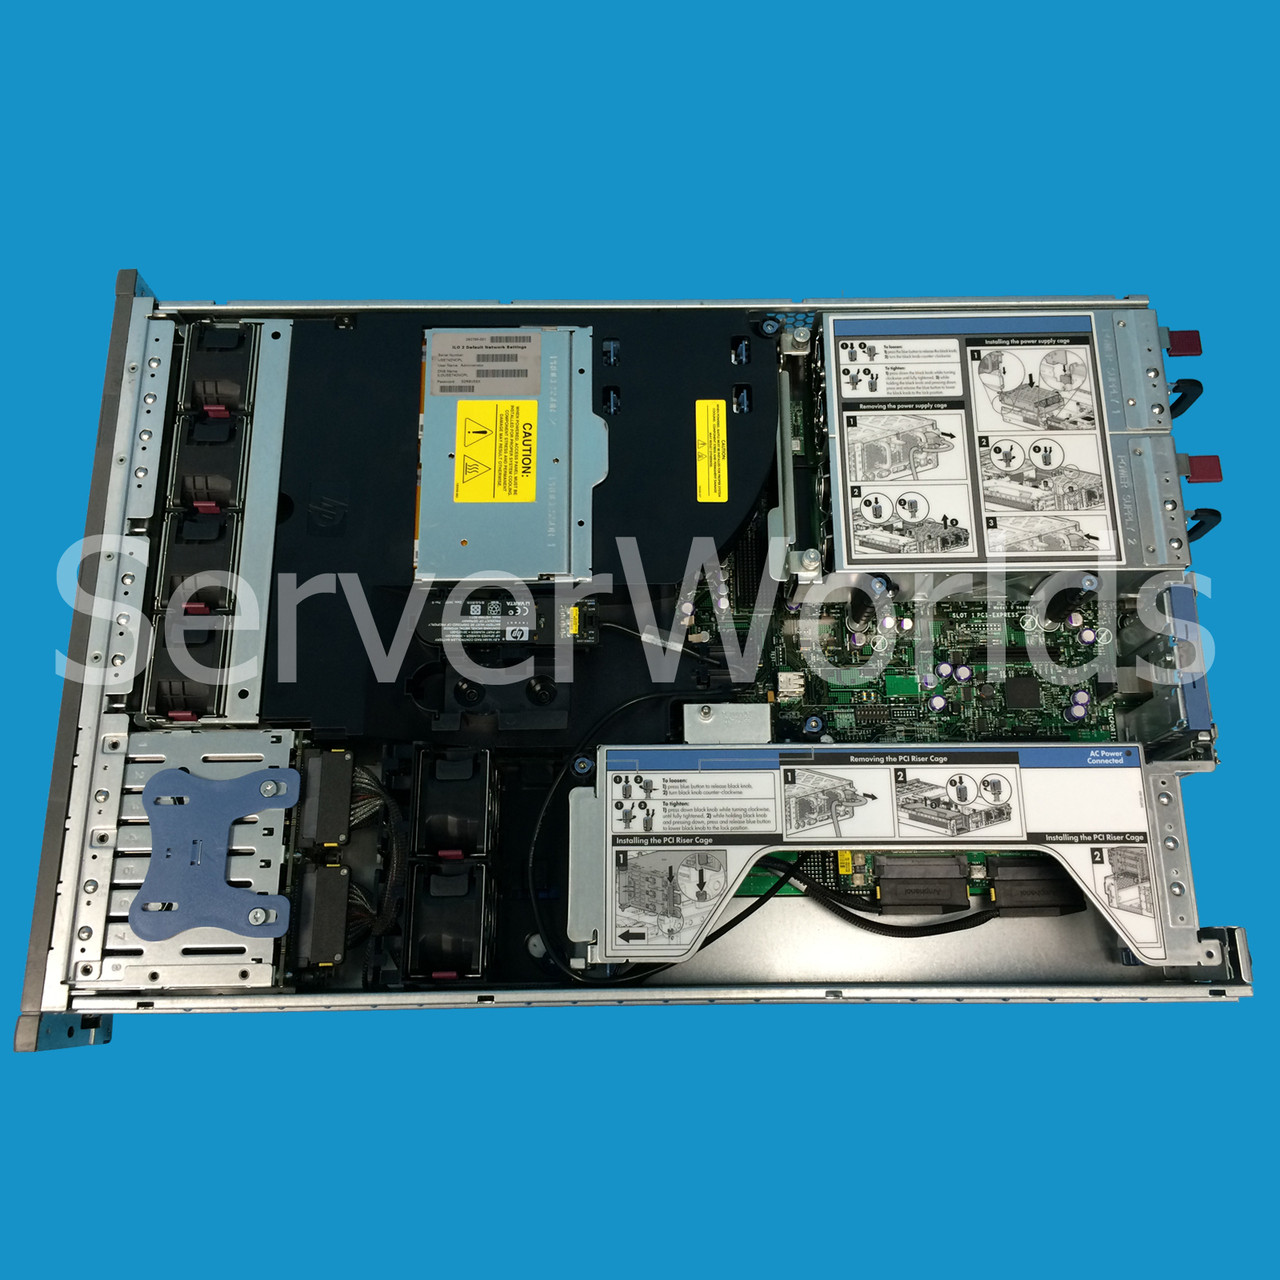 Refurbished HP DL380 G5 2 x E5450 3.0Ghz 4GB 458562-001